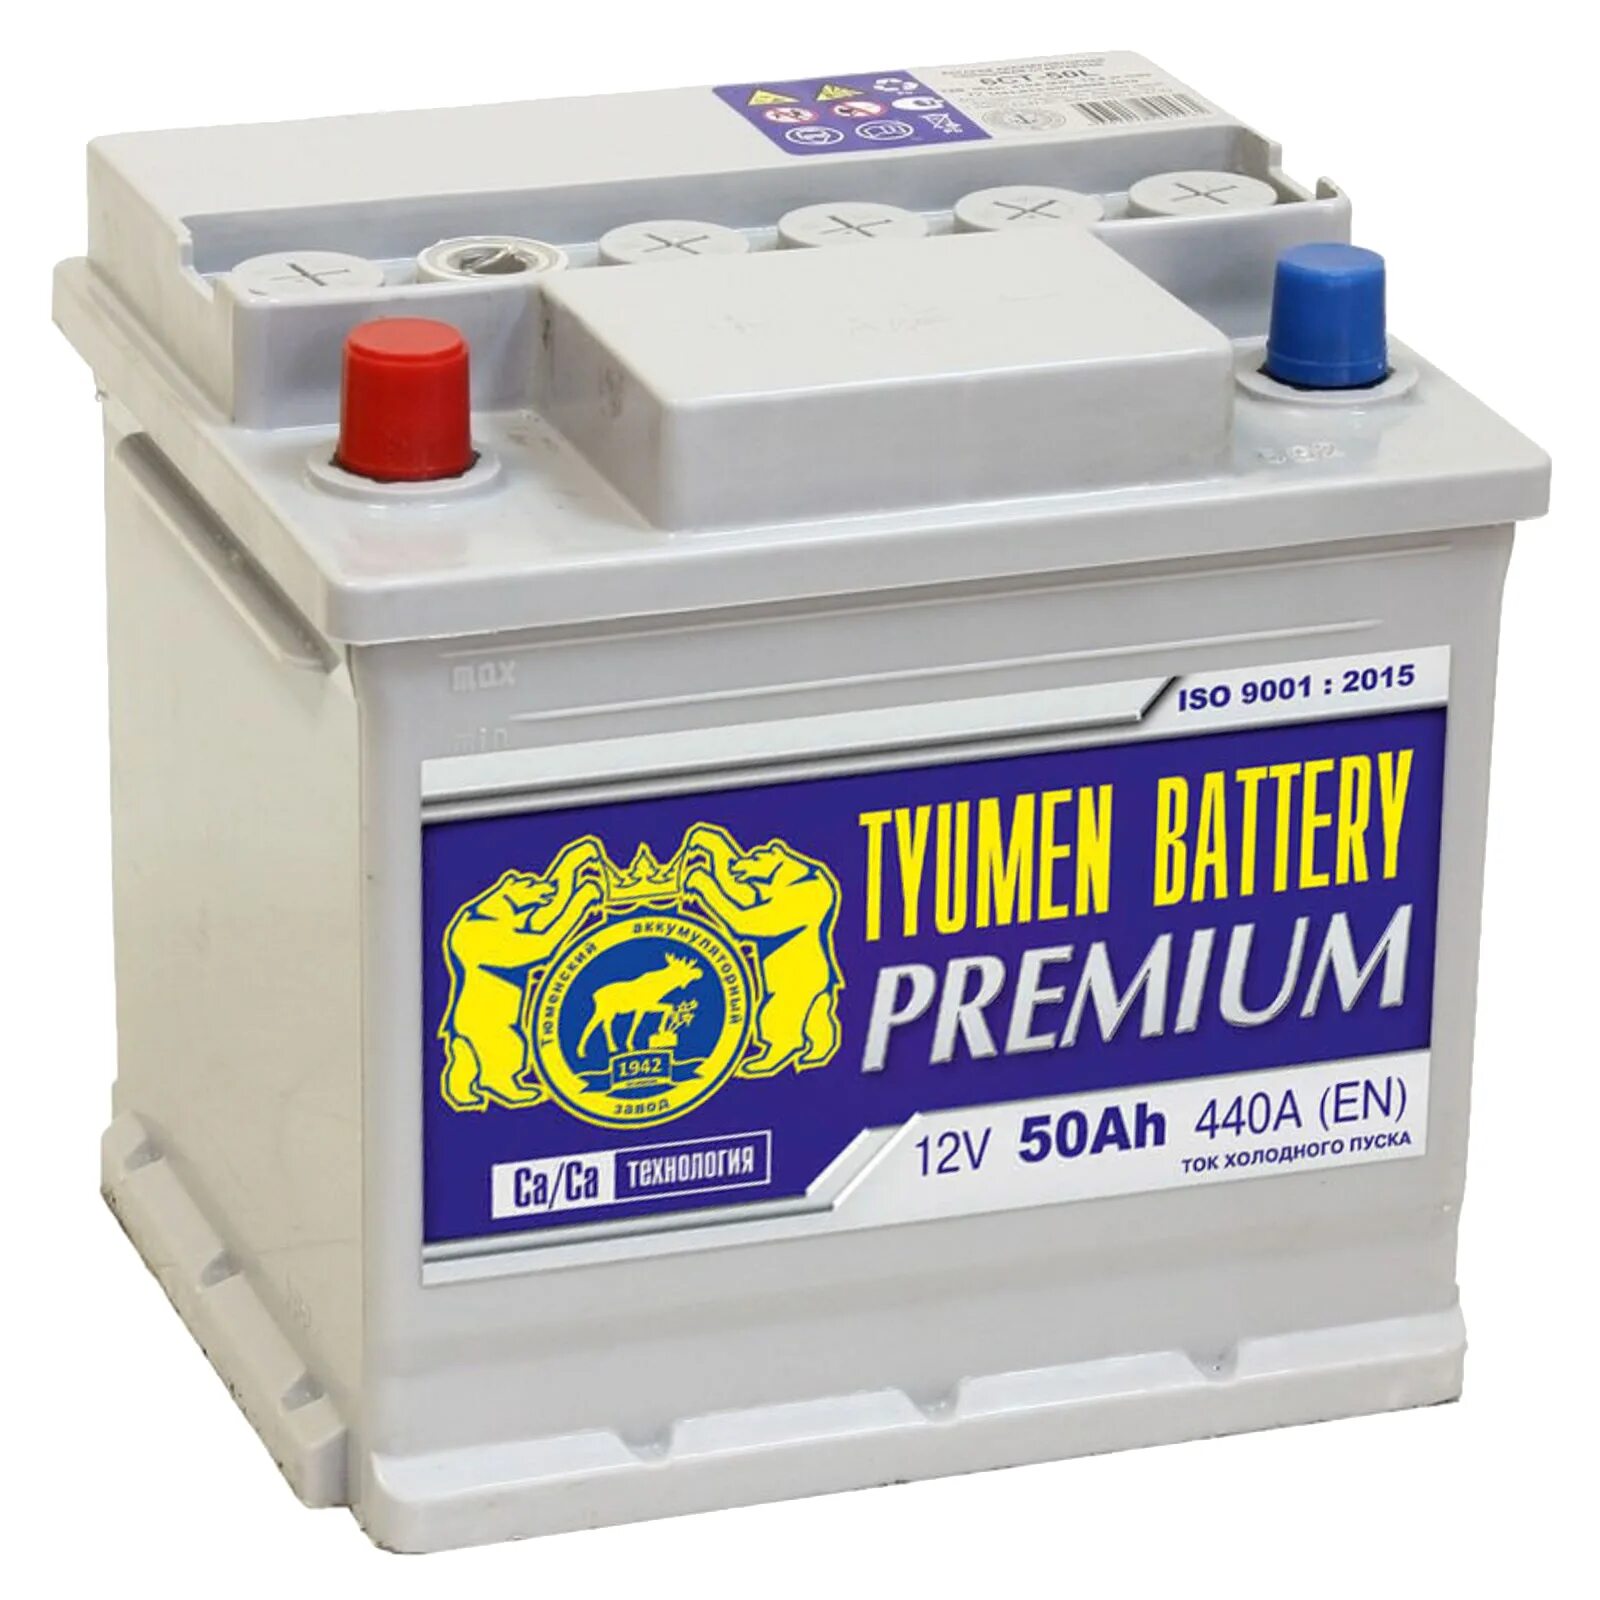 Tyumen Battery" Premium 145 Ач. Аккумулятор Tyumen Battery Premium. 6ст-50l Premium. АКБ Тyumen Battery Premium 6ст-50.1l. В автомобильных аккумуляторах название вещества